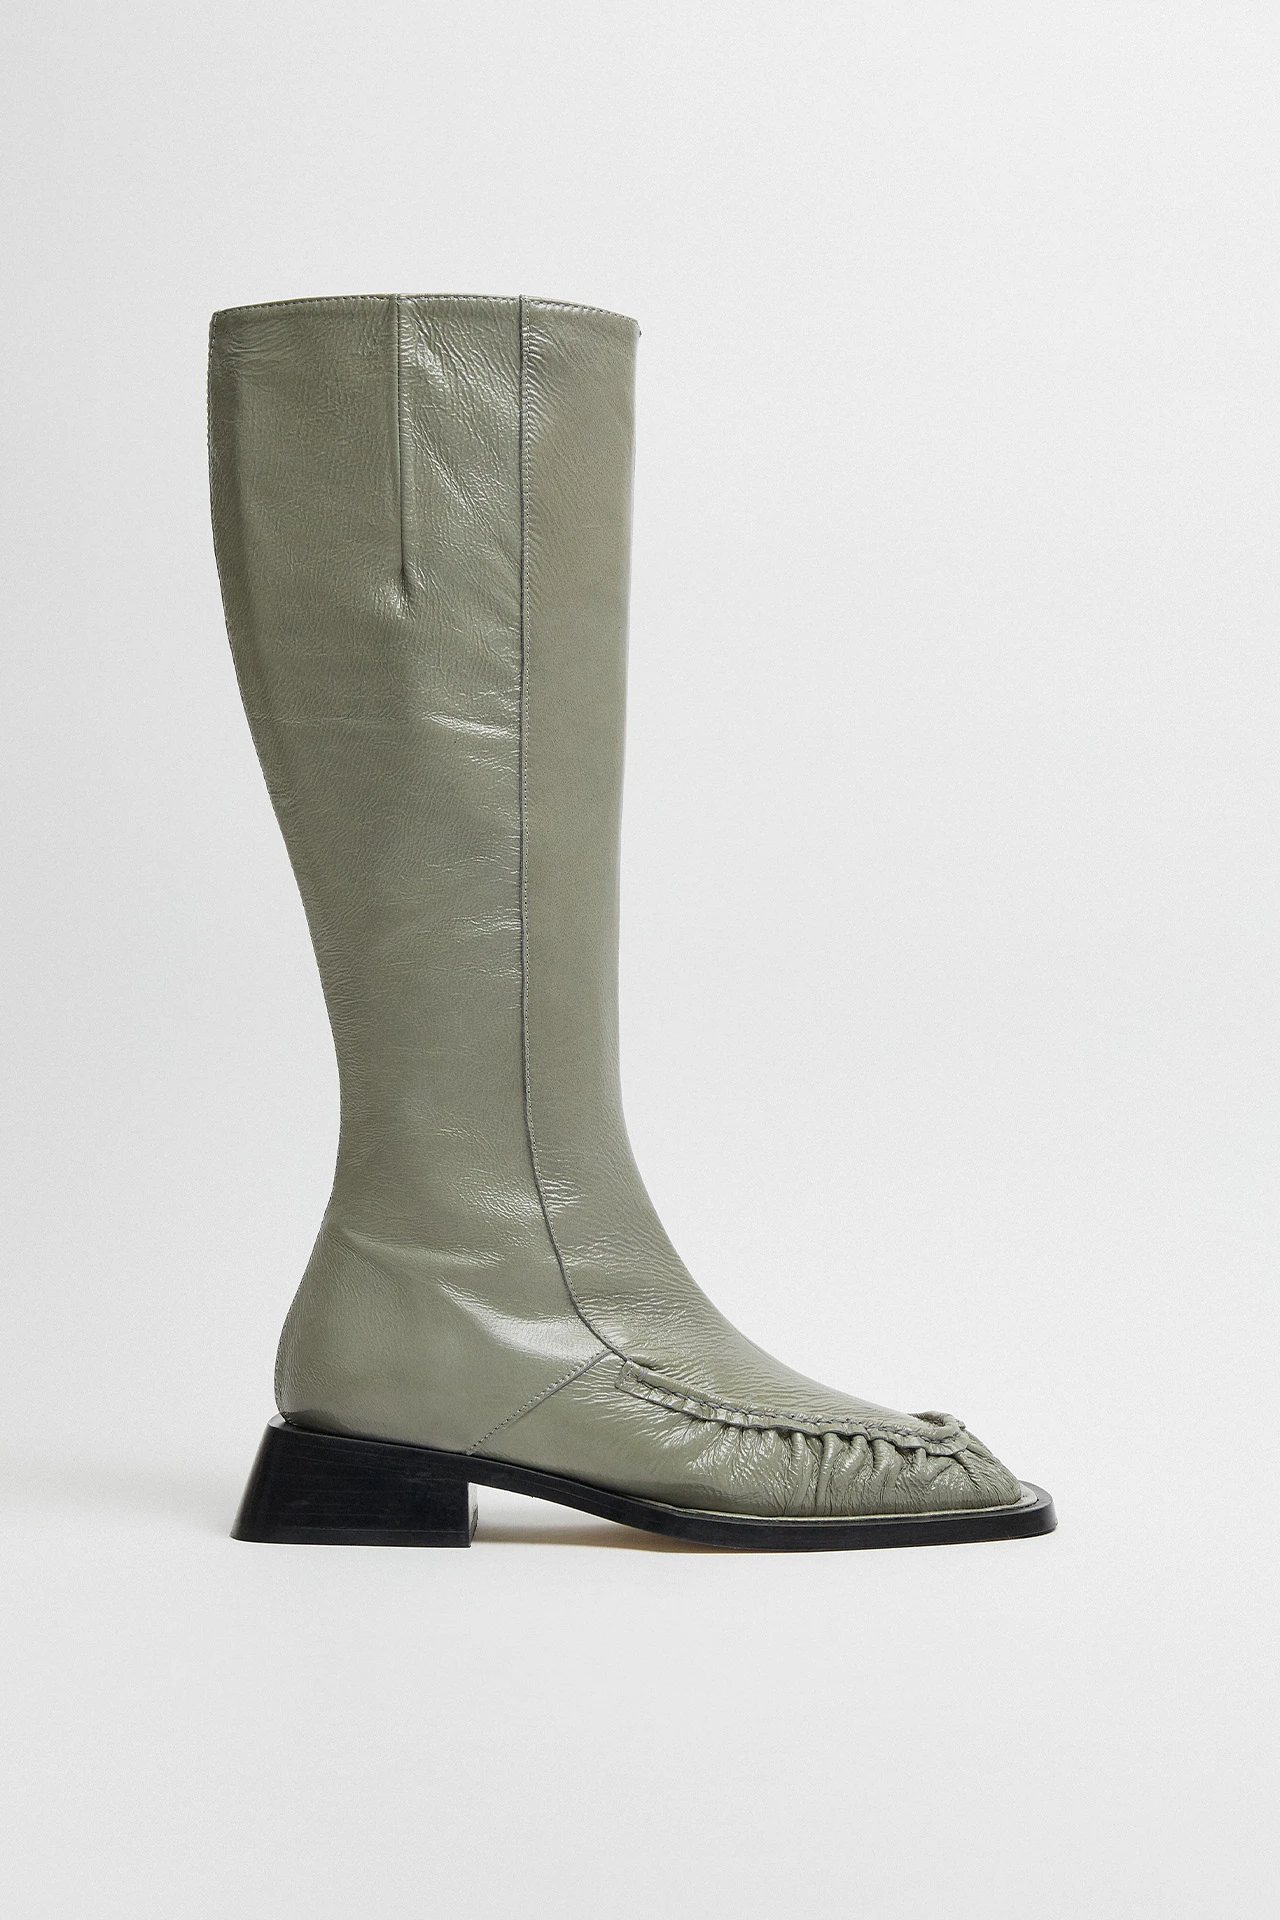 Miista-pats-grey-boots-01